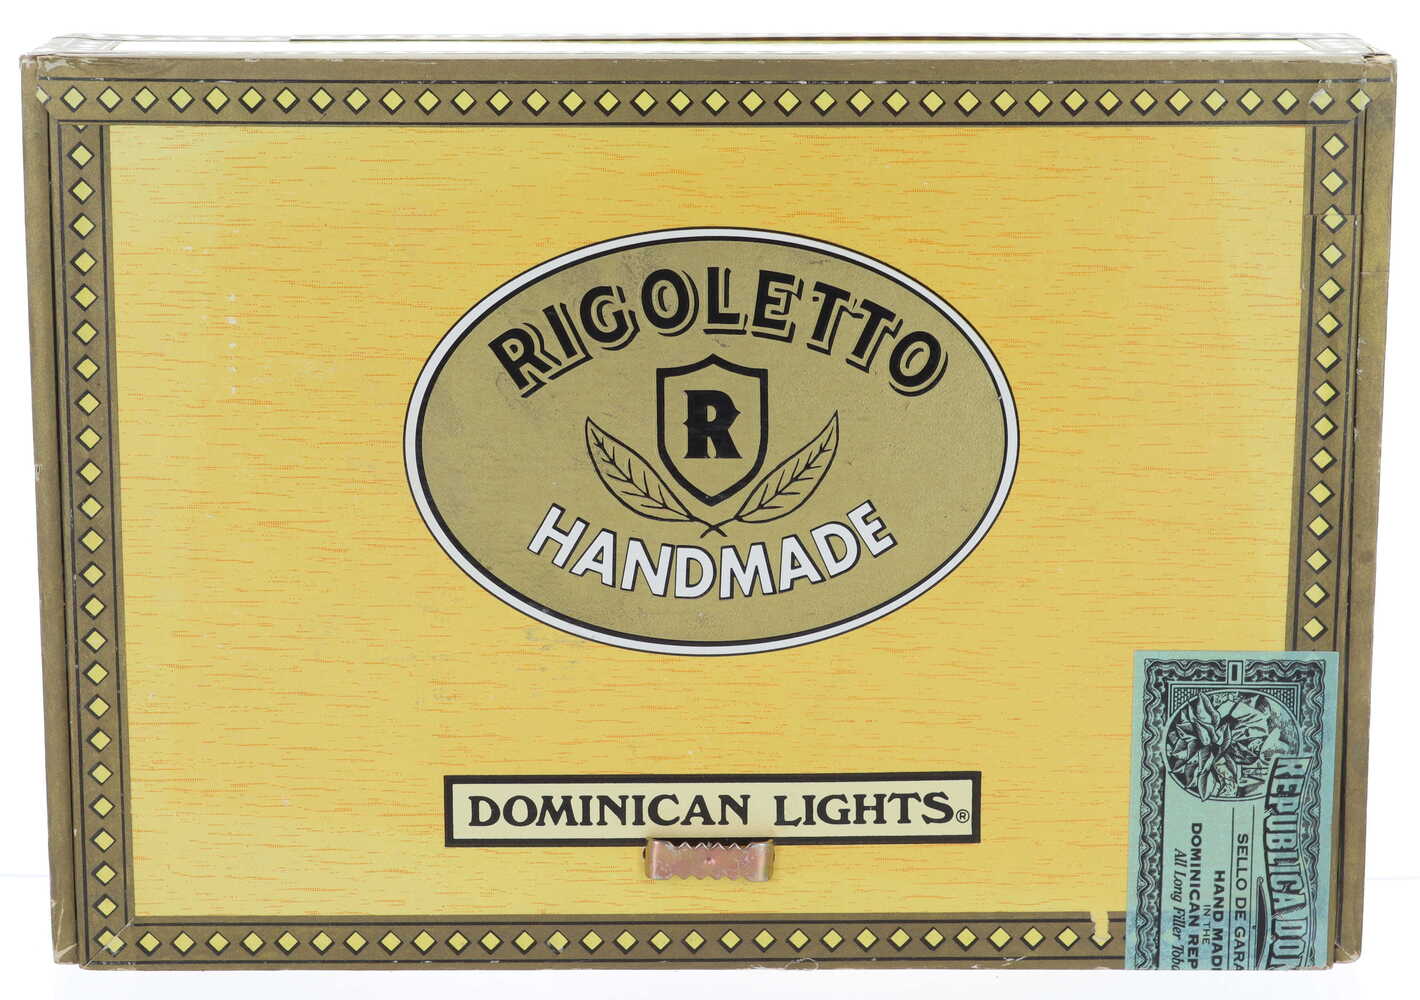 RIGOLETTO DOMINICAN LIGHTS HANDMADE EMPTY YELLOW WOODEN CIGAR BOX